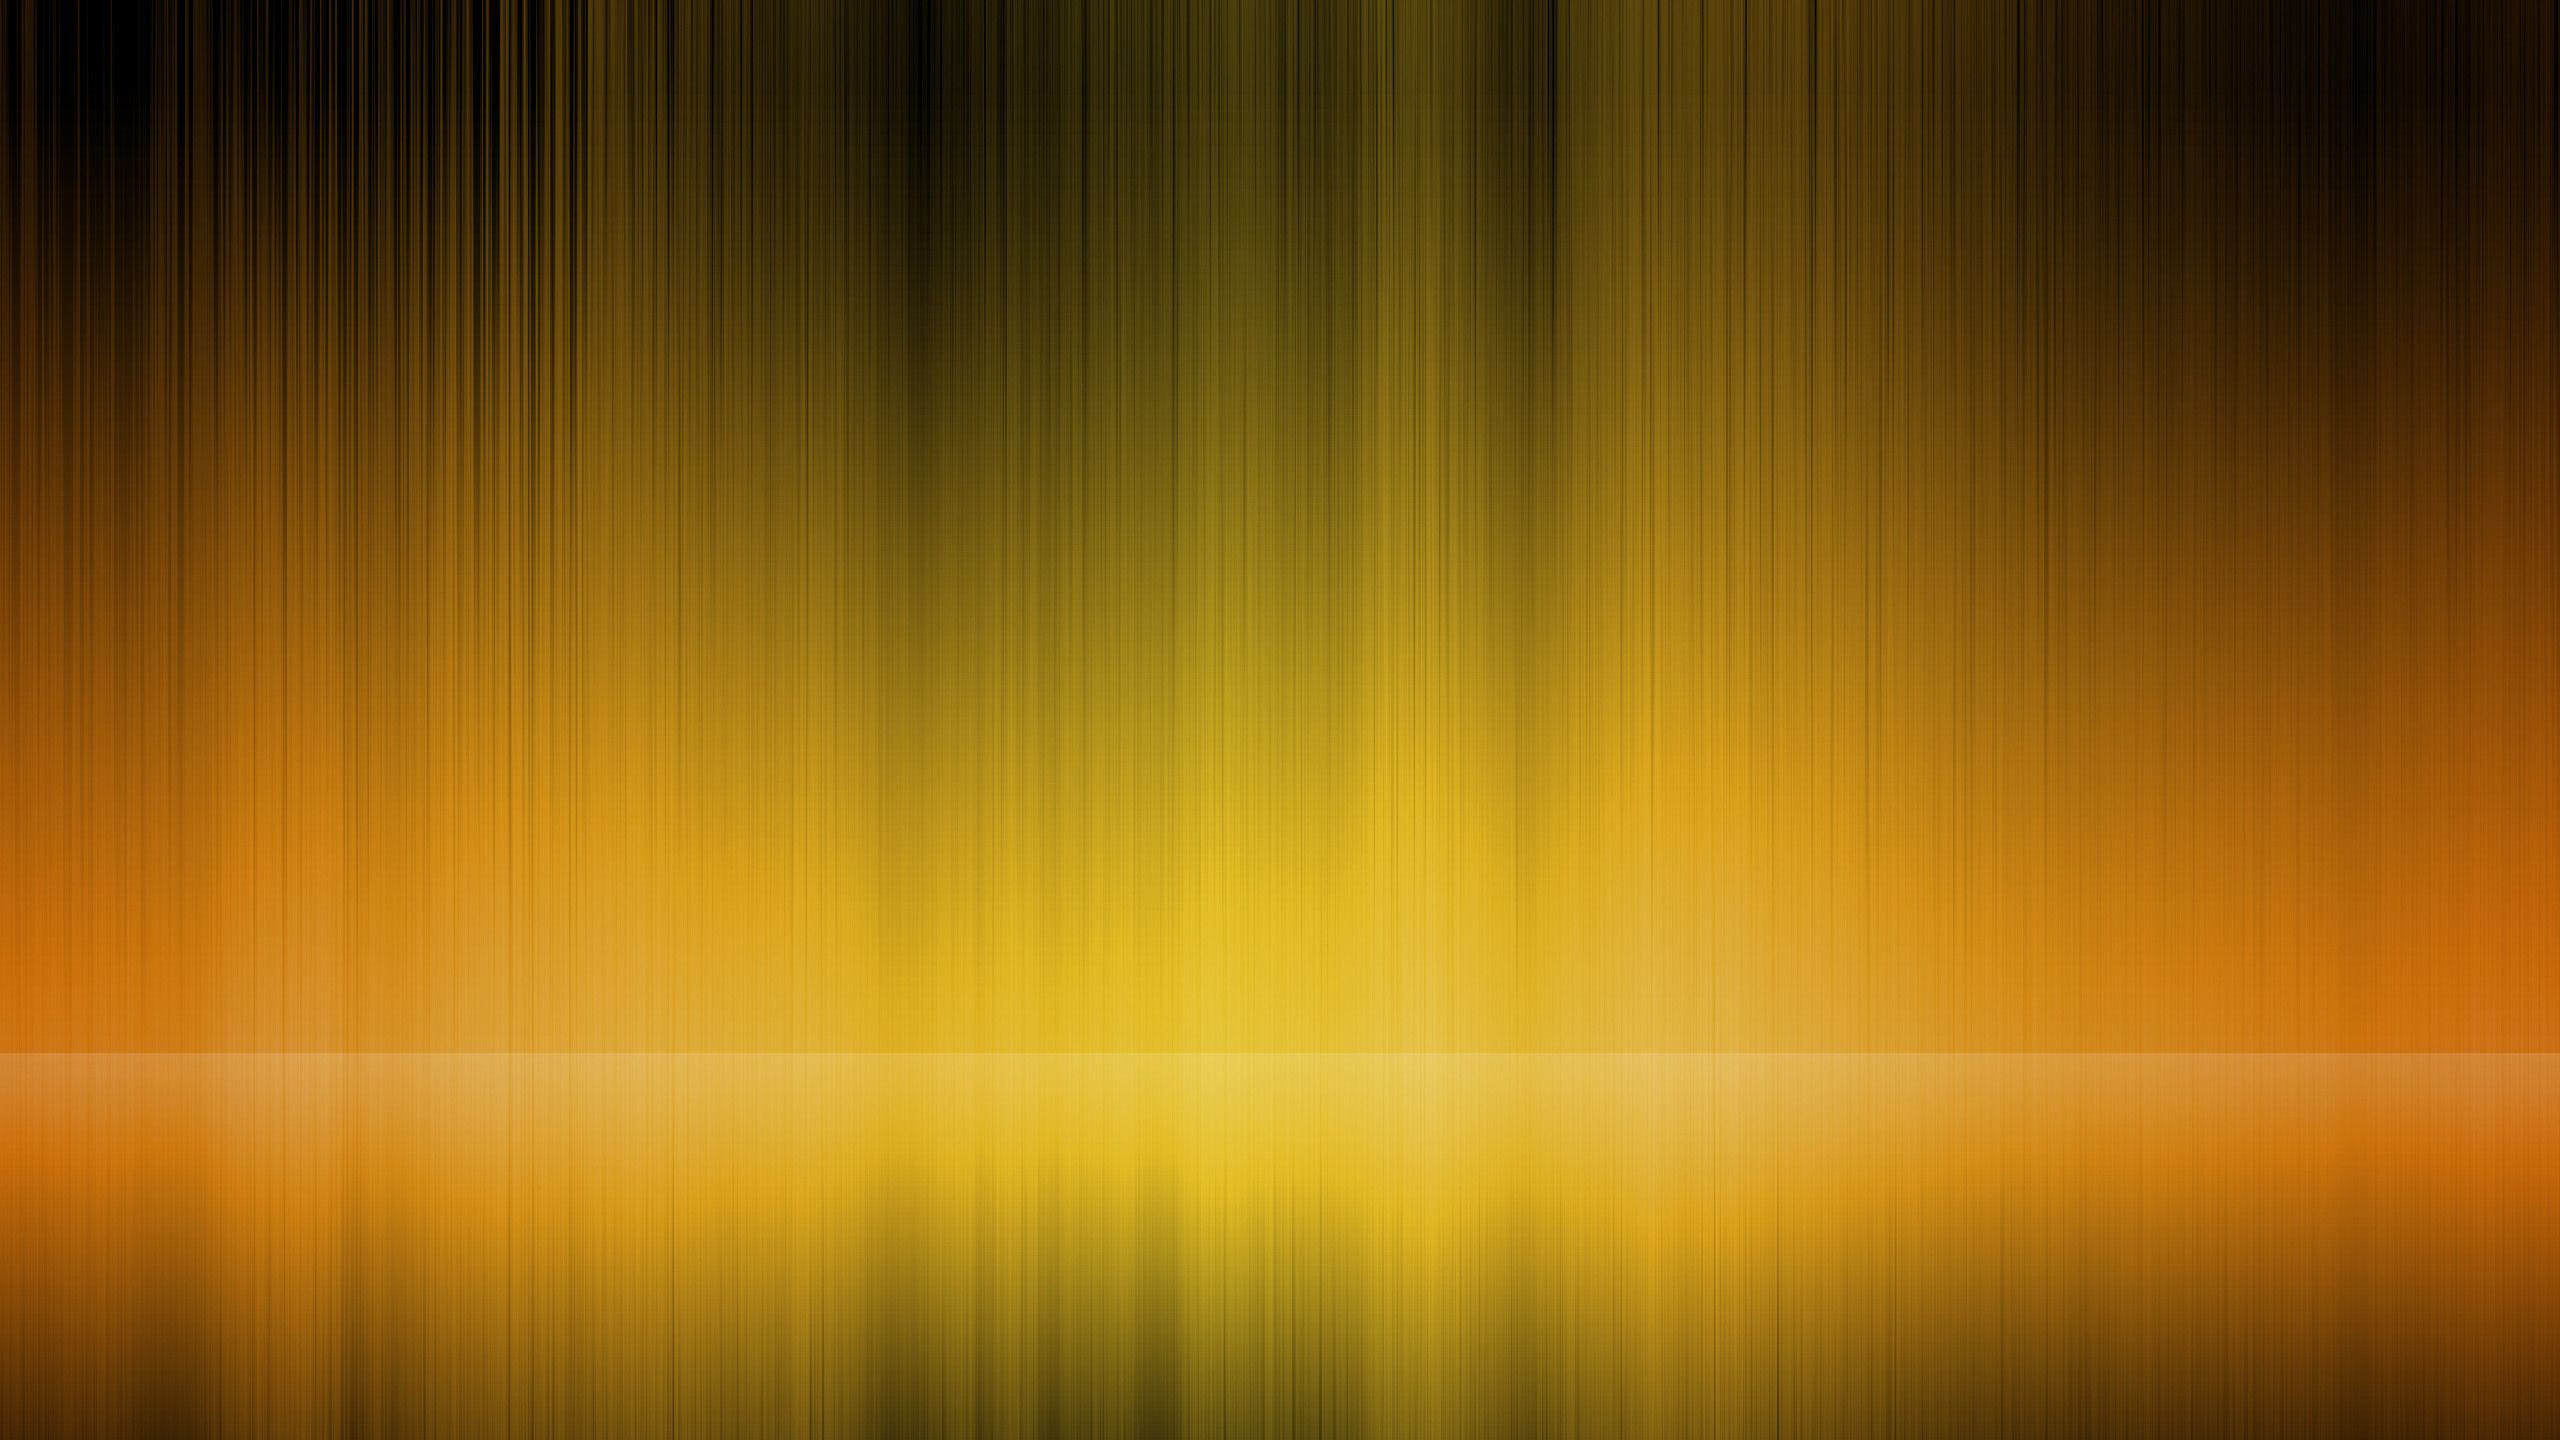 Black and Yellow Wallpaper HD Desktop 2534 - HD Wallpapers Site